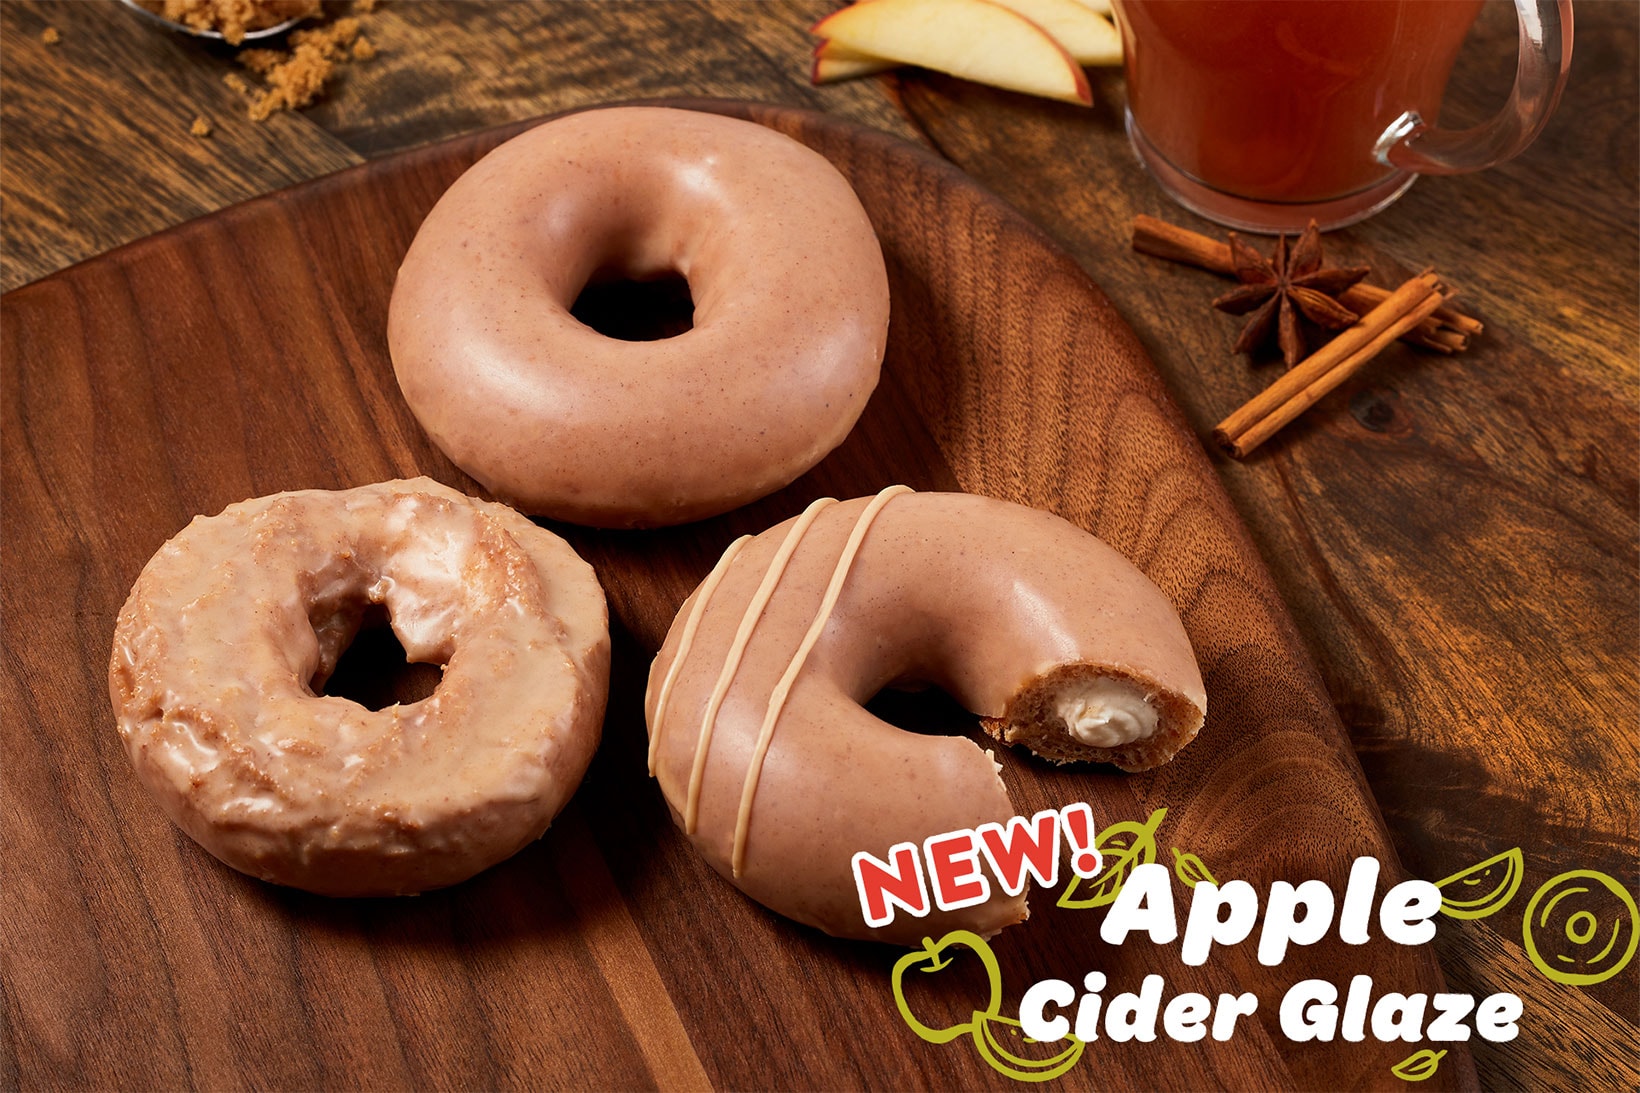 krispy kreme donuts fall for glaze apple cider